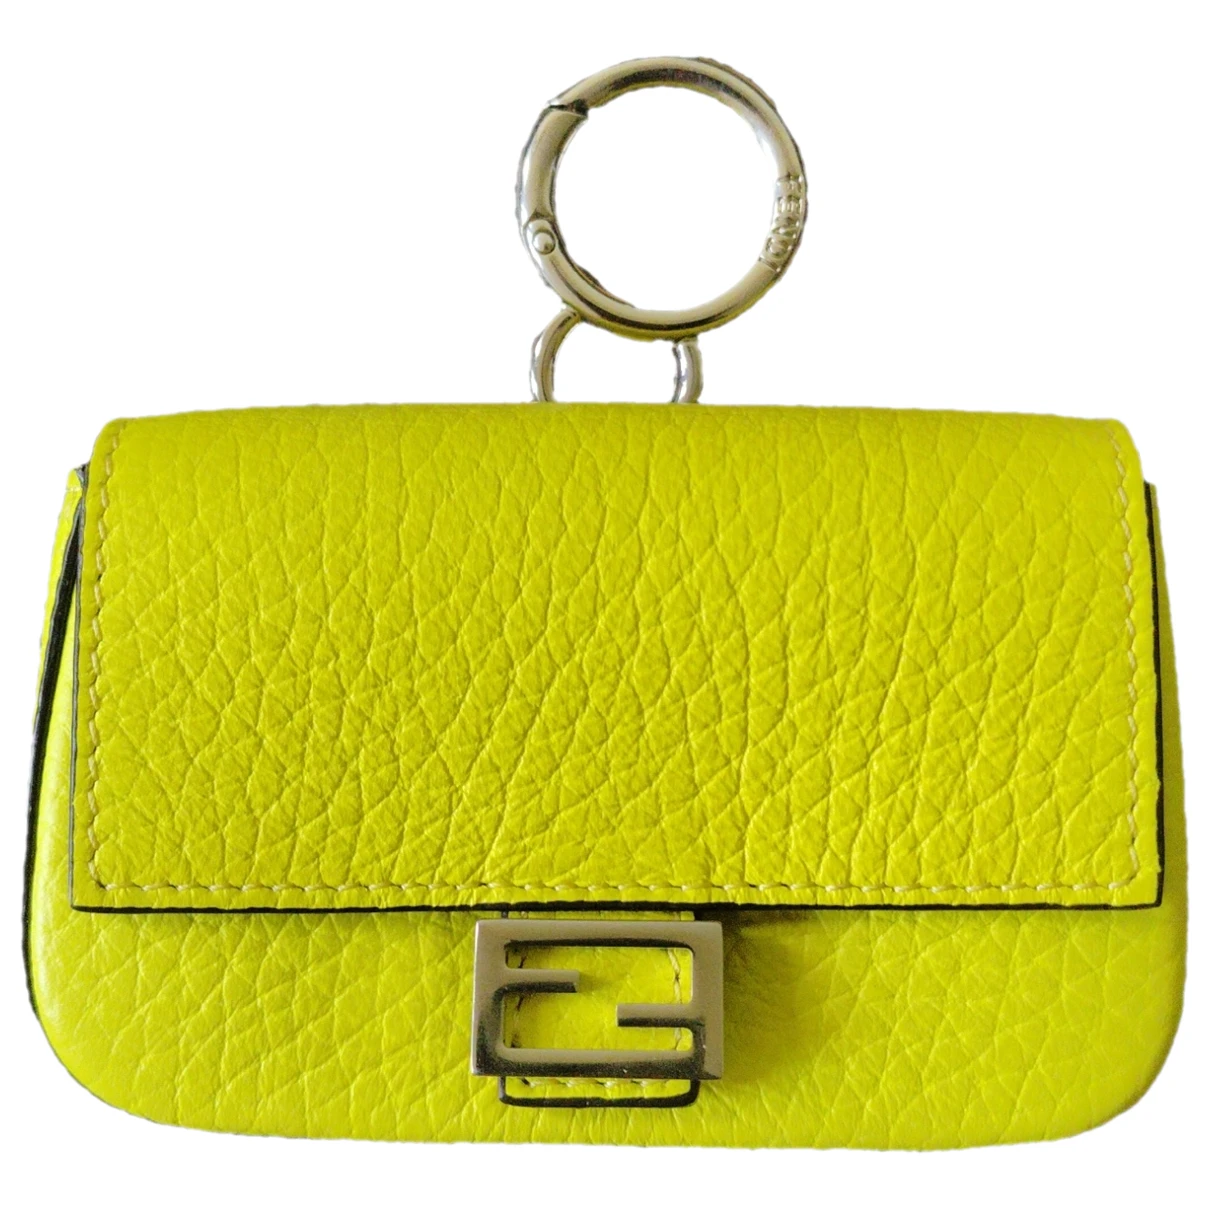 Pre-owned Fendi Baguette Leather Handbag In Yellow